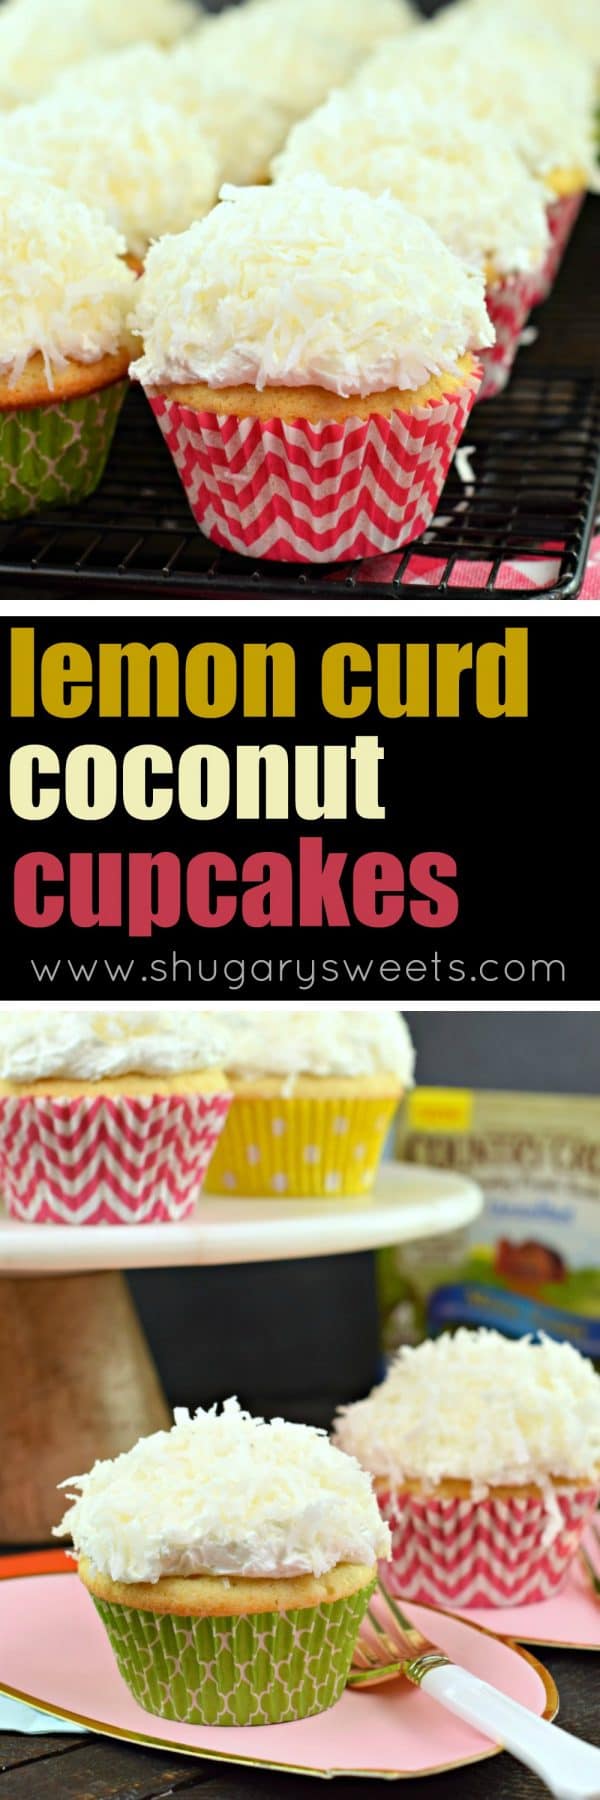 lemon coconut cupcakes collage photo